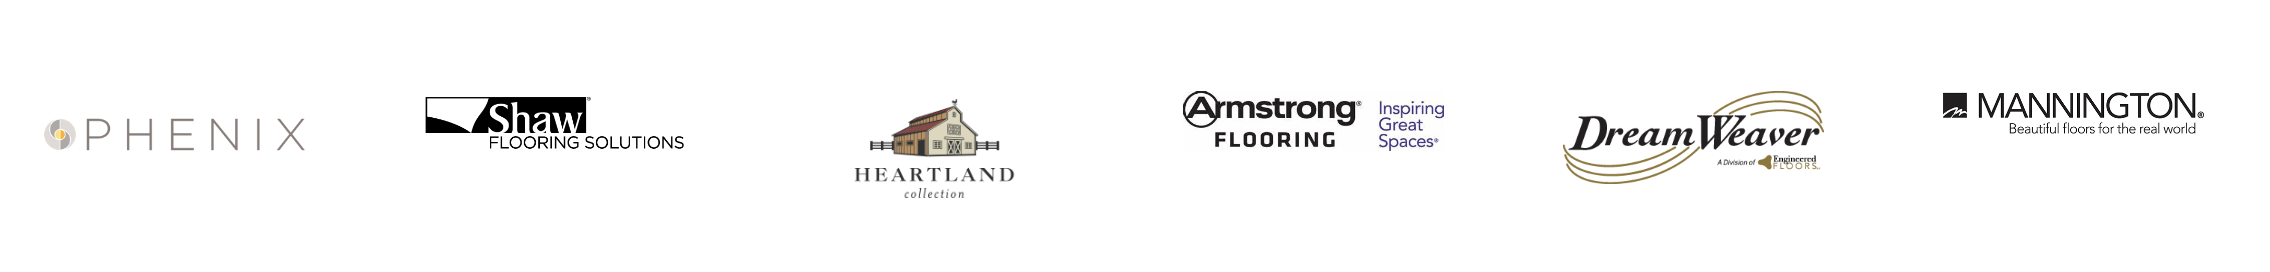 flooring-brands-ohio-floors.png